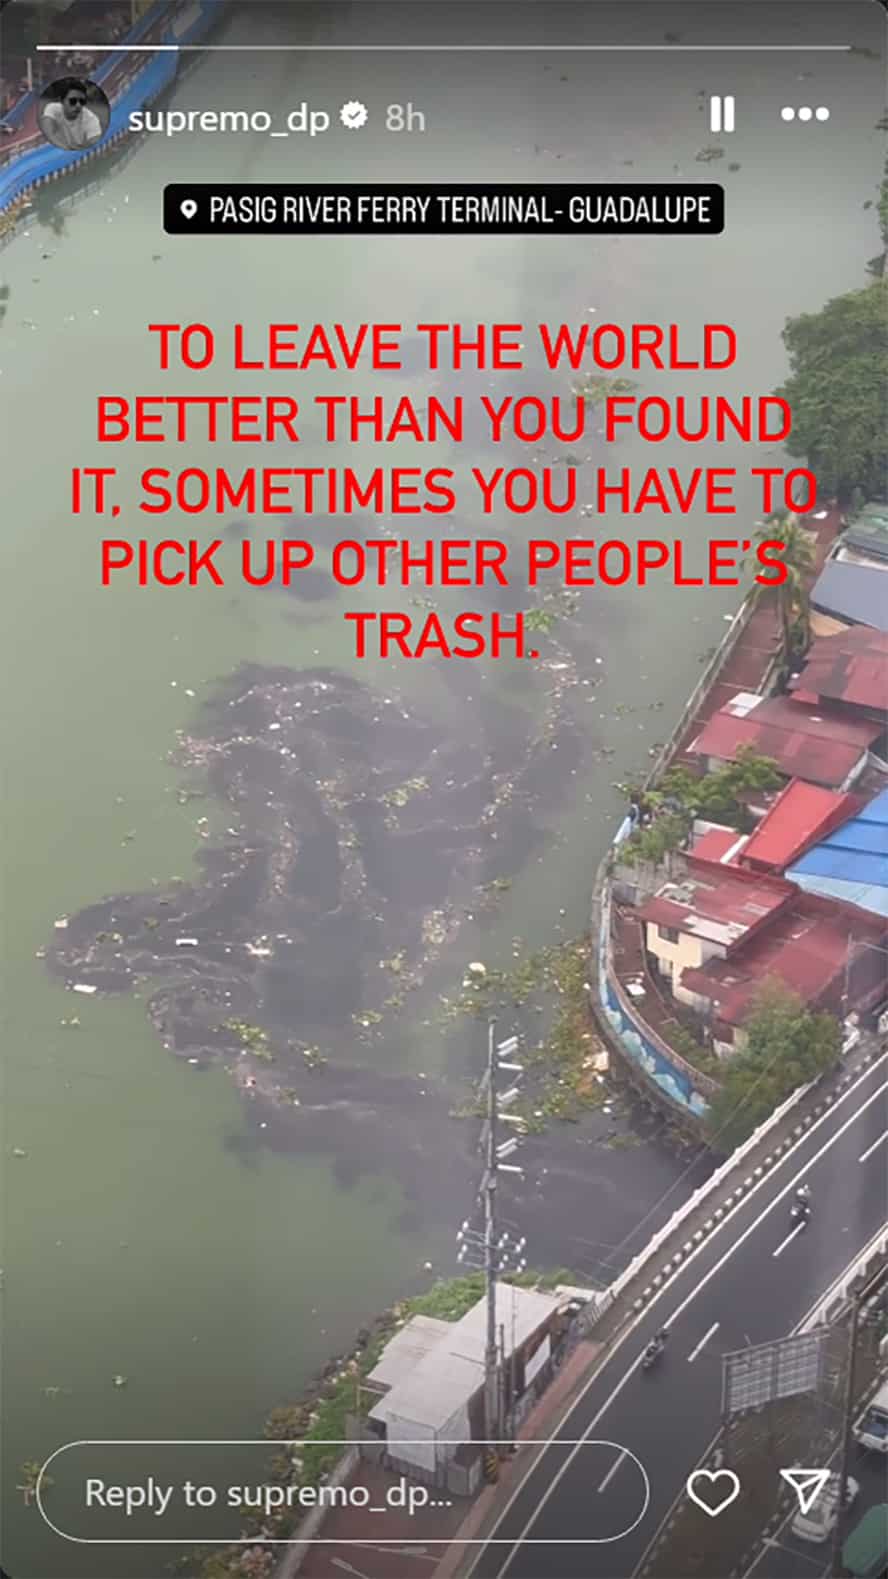 Daniel Padilla, nag-post ng pic Pasig River: “Sometimes you have to pick up other people's trash”